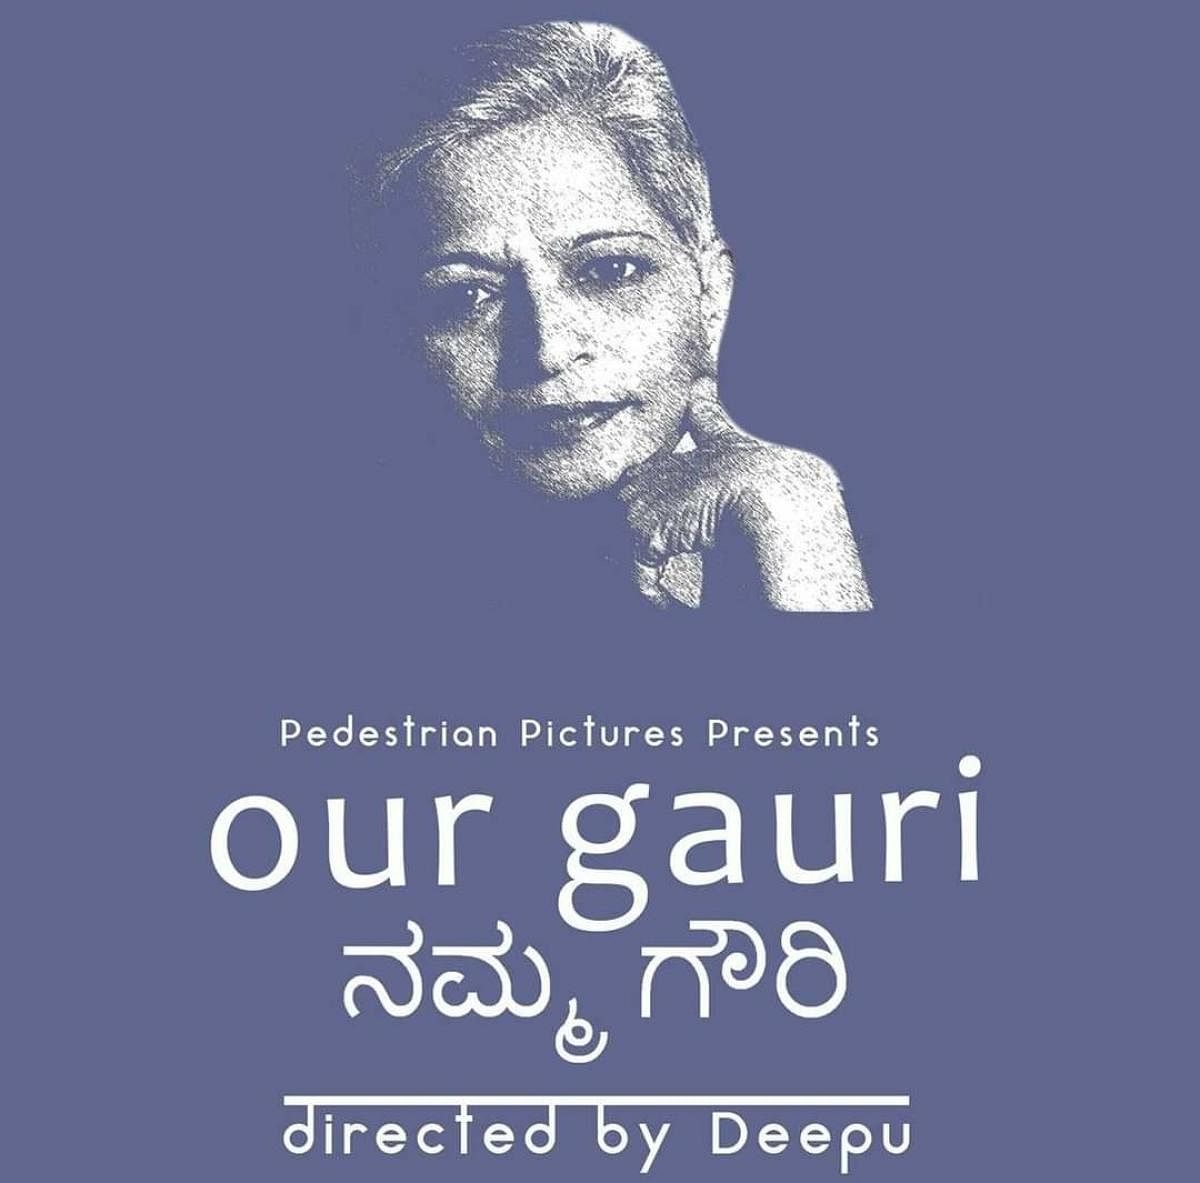 Pradeep Deepu's 'Our Gauri', a documentary on Gauri Lankesh, has had 600 screenings across the country ever since it released in 2017. 